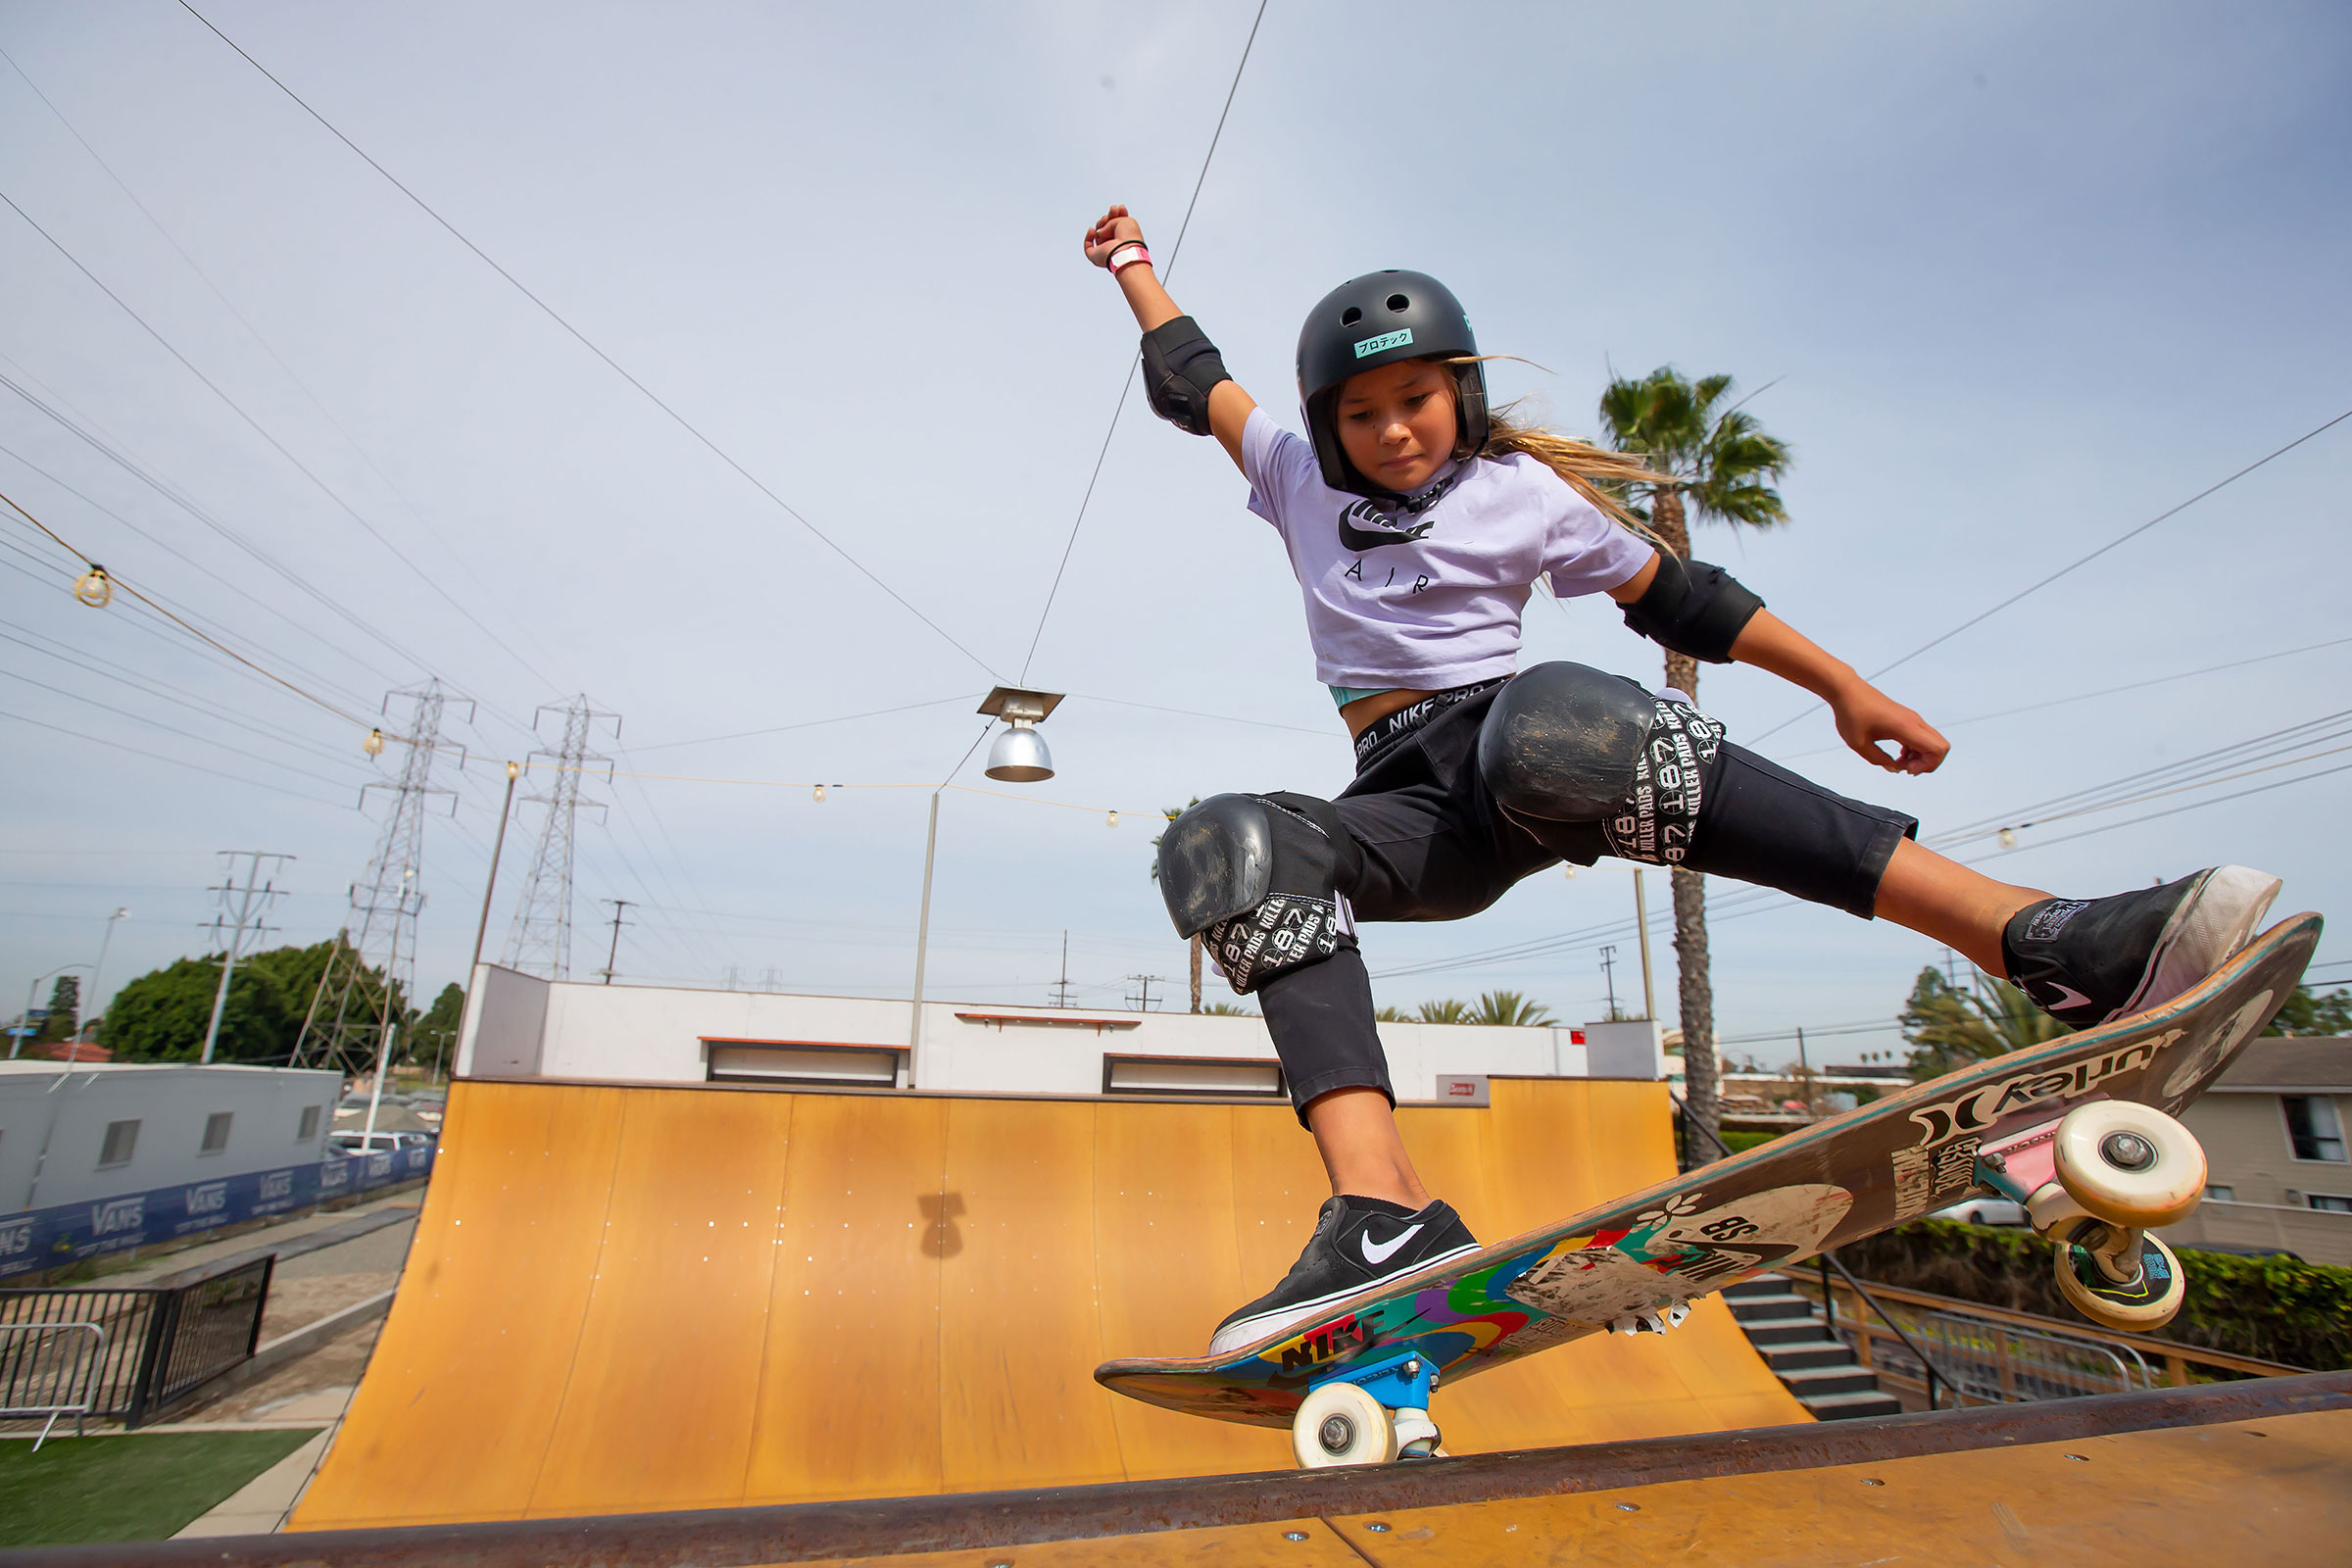 Sky Brown at Vans Off The Wall Huntington Beach skatepark in 2020 in Los Angeles, California.